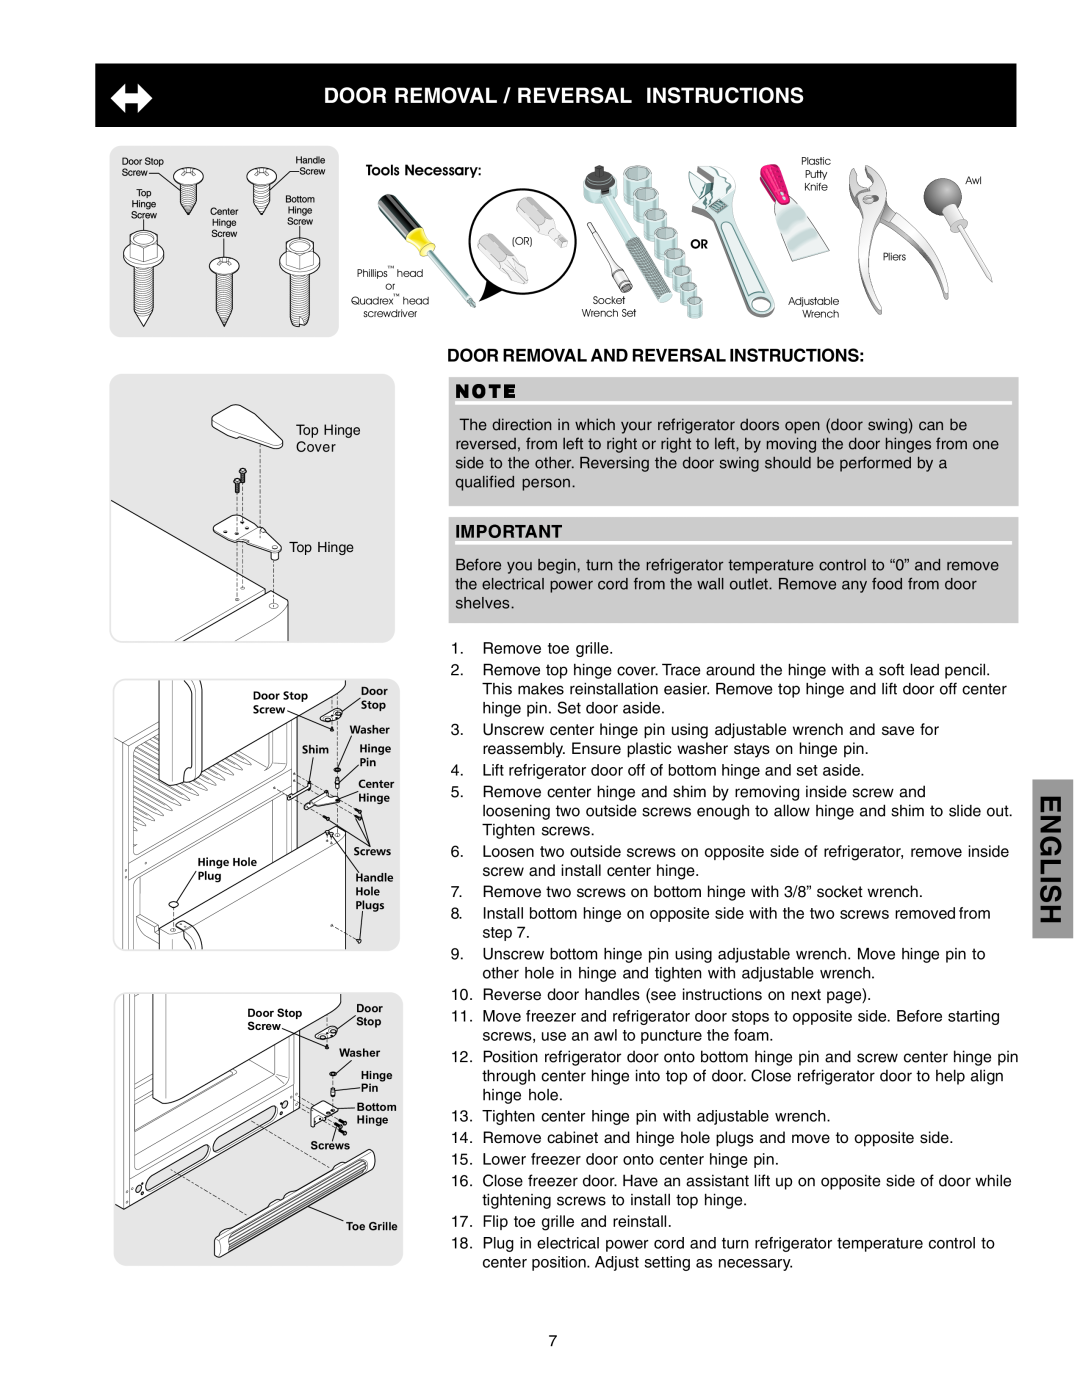 Kenmore 241815202 manual English, Door Removal / Reversal Instructions, Door Removal And Reversal Instructions 